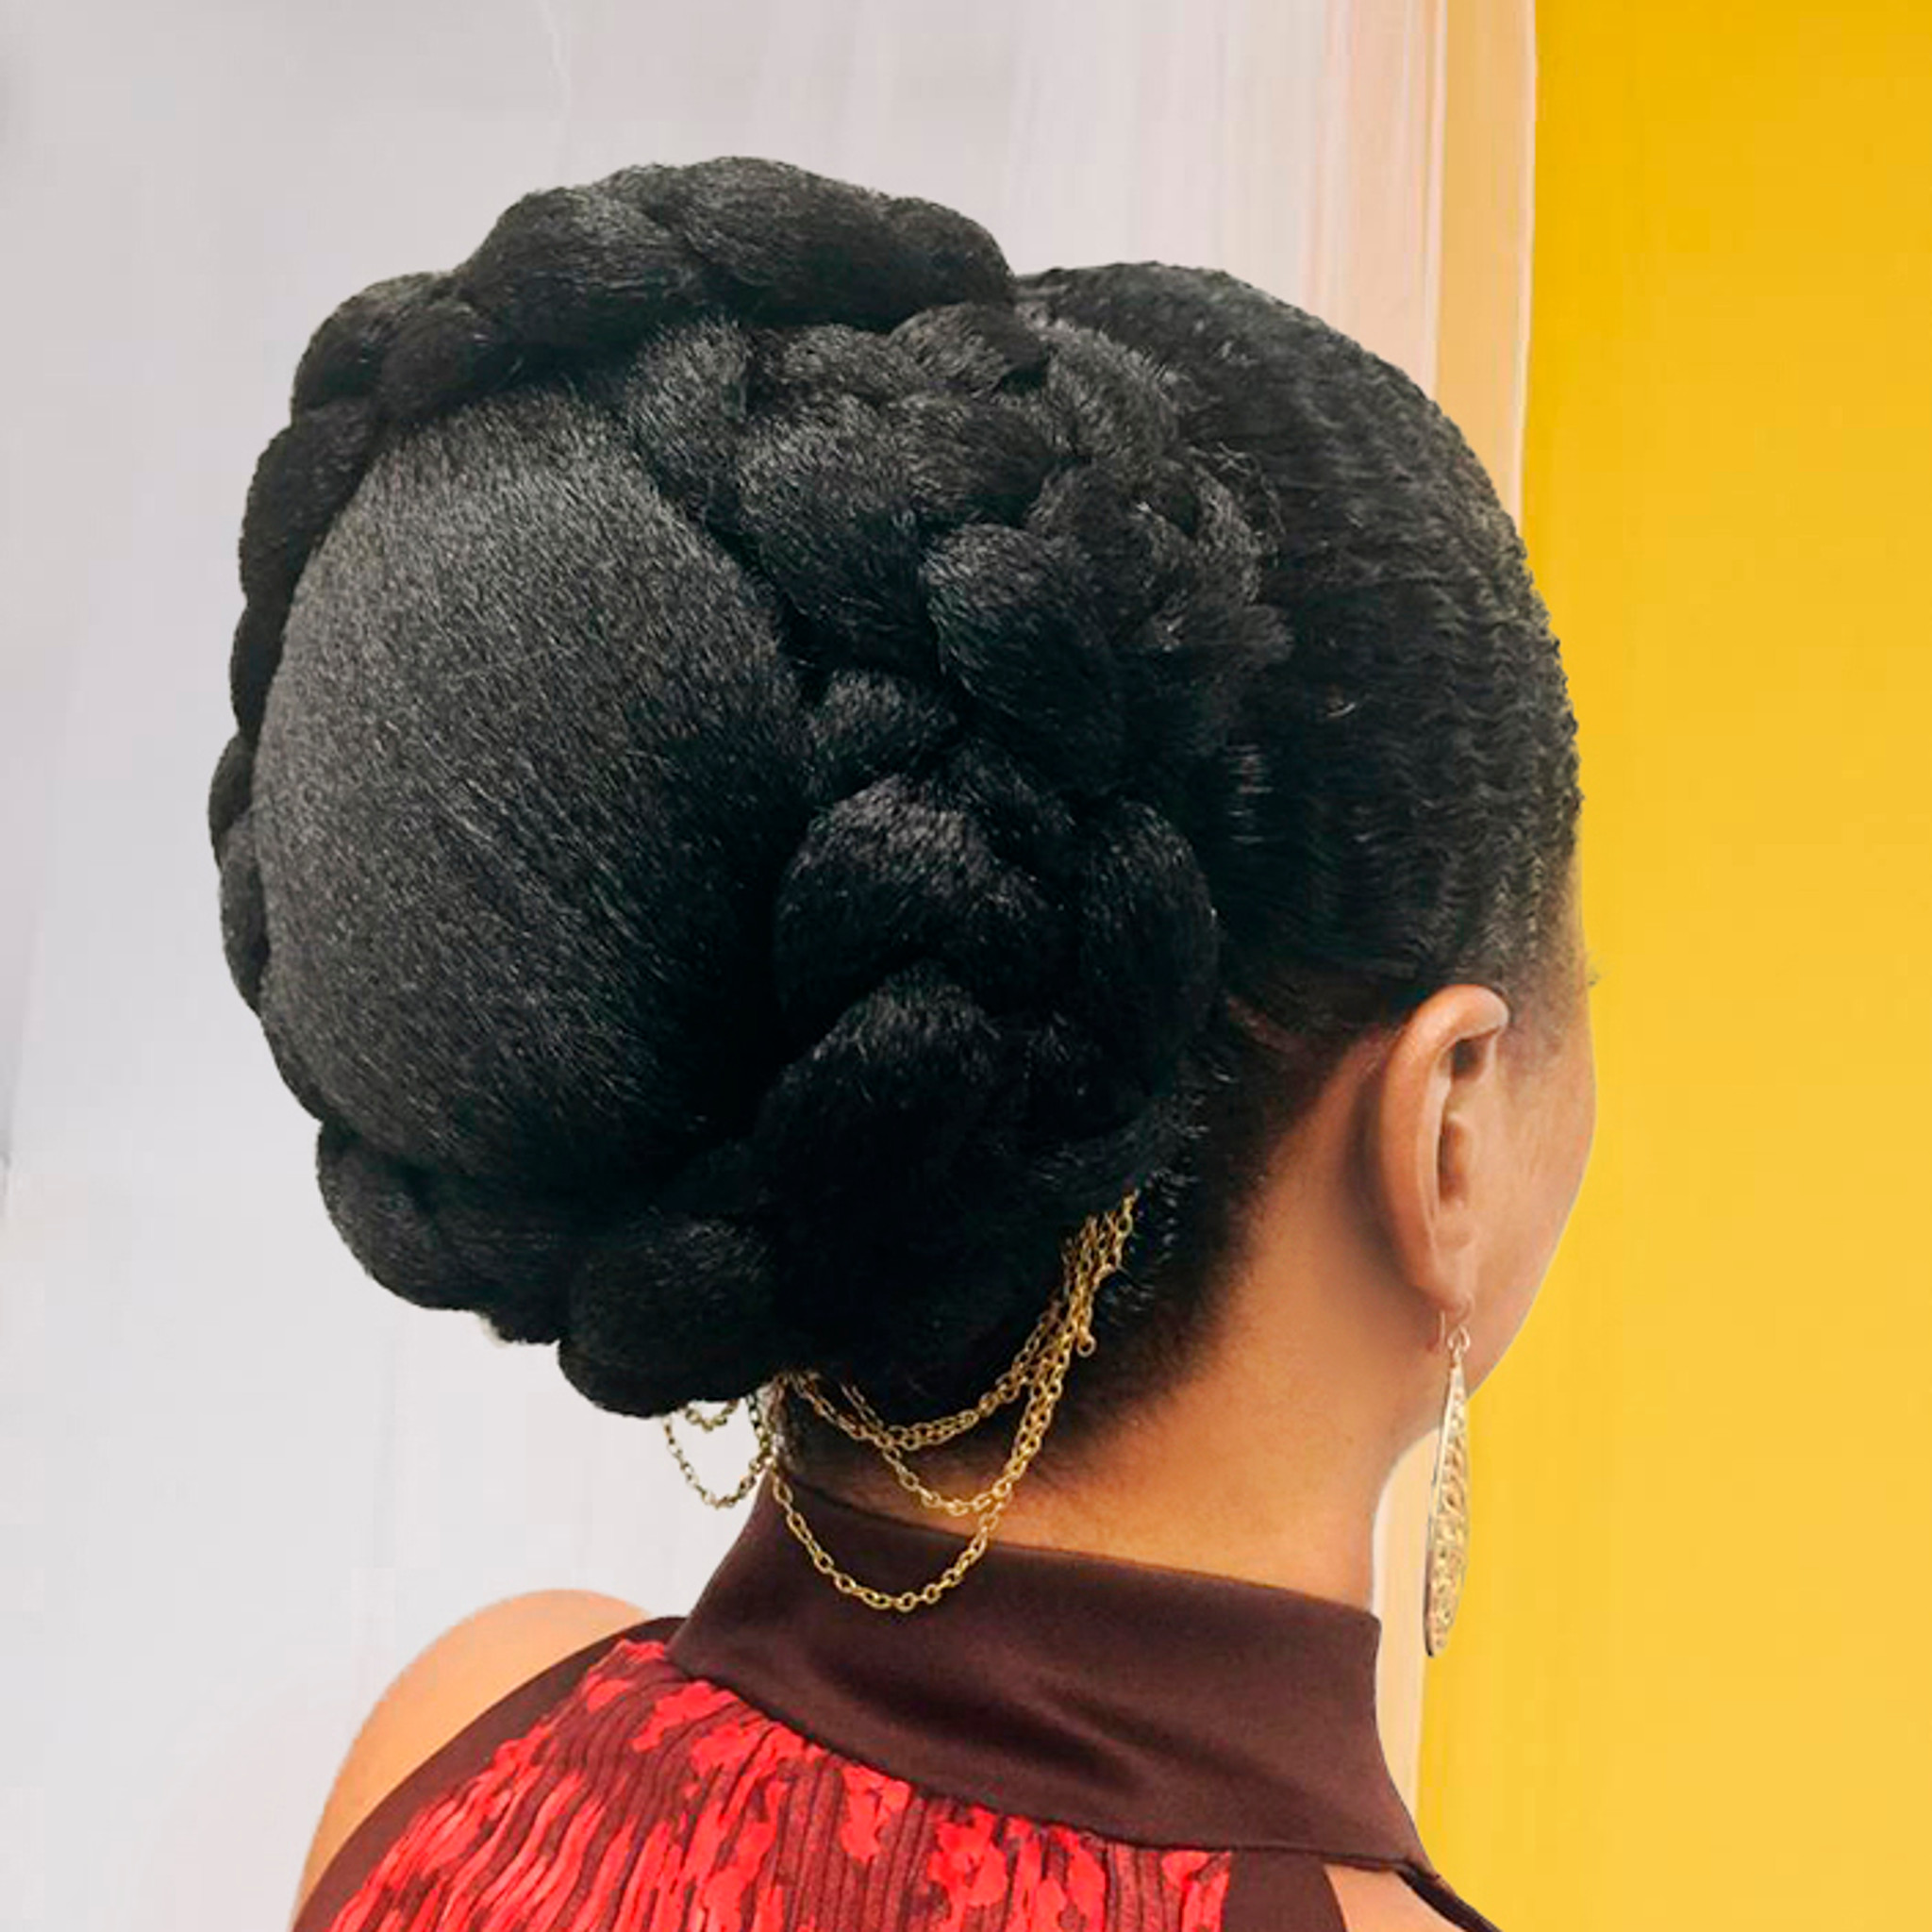 Big Chop & Brilliant Short Hairstyles for Black Women To TRY! #bigchop  #shortnaturalhair - YouTube